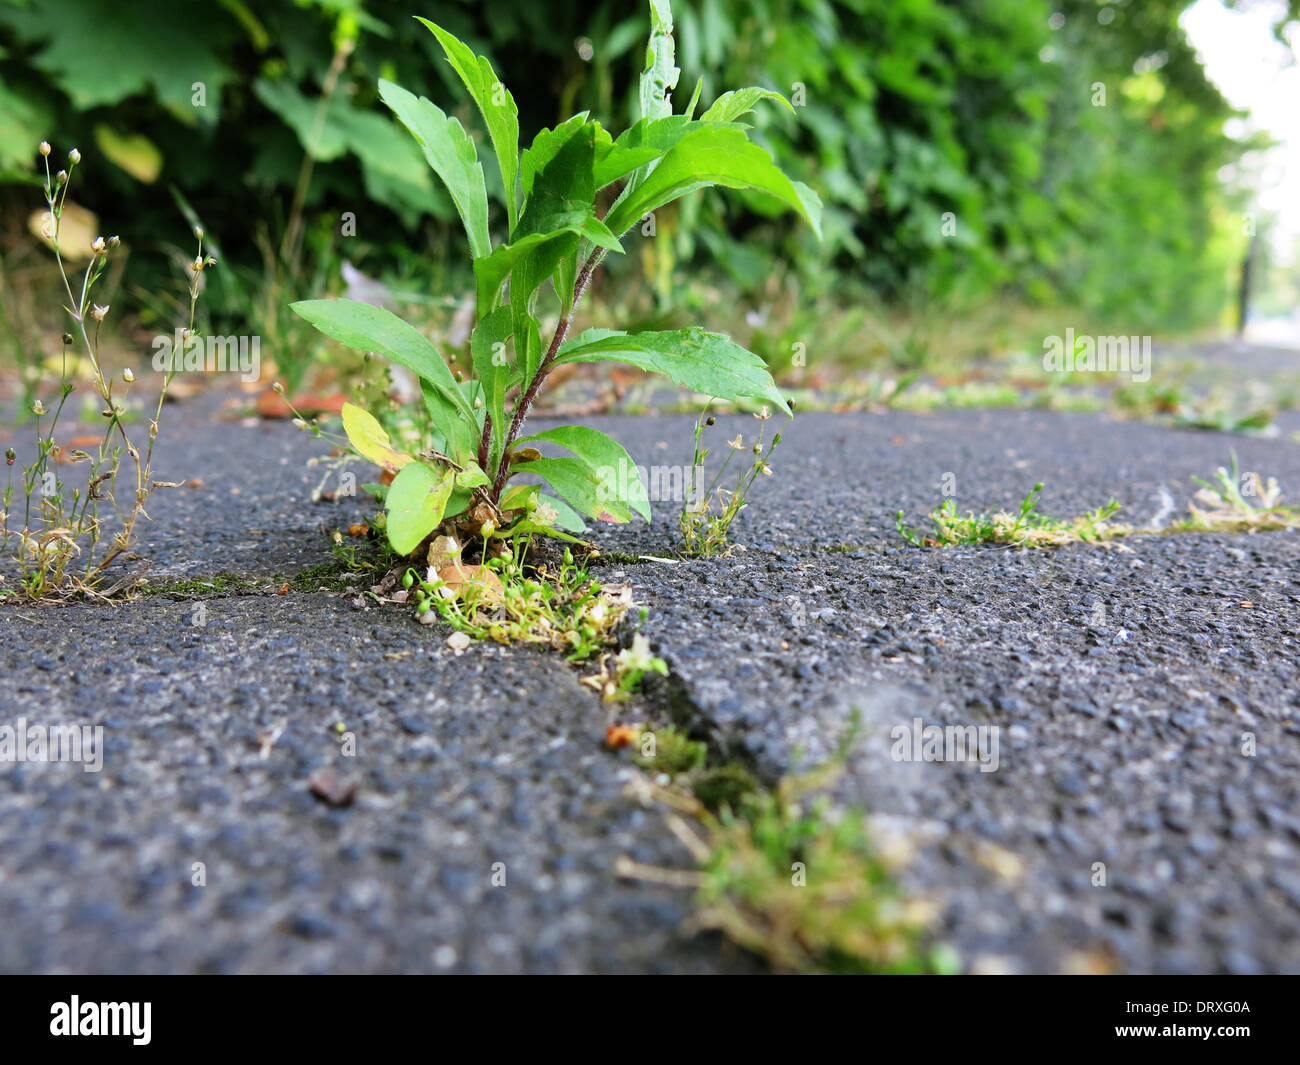 Rambling weeds on concrete ground Stock Photo